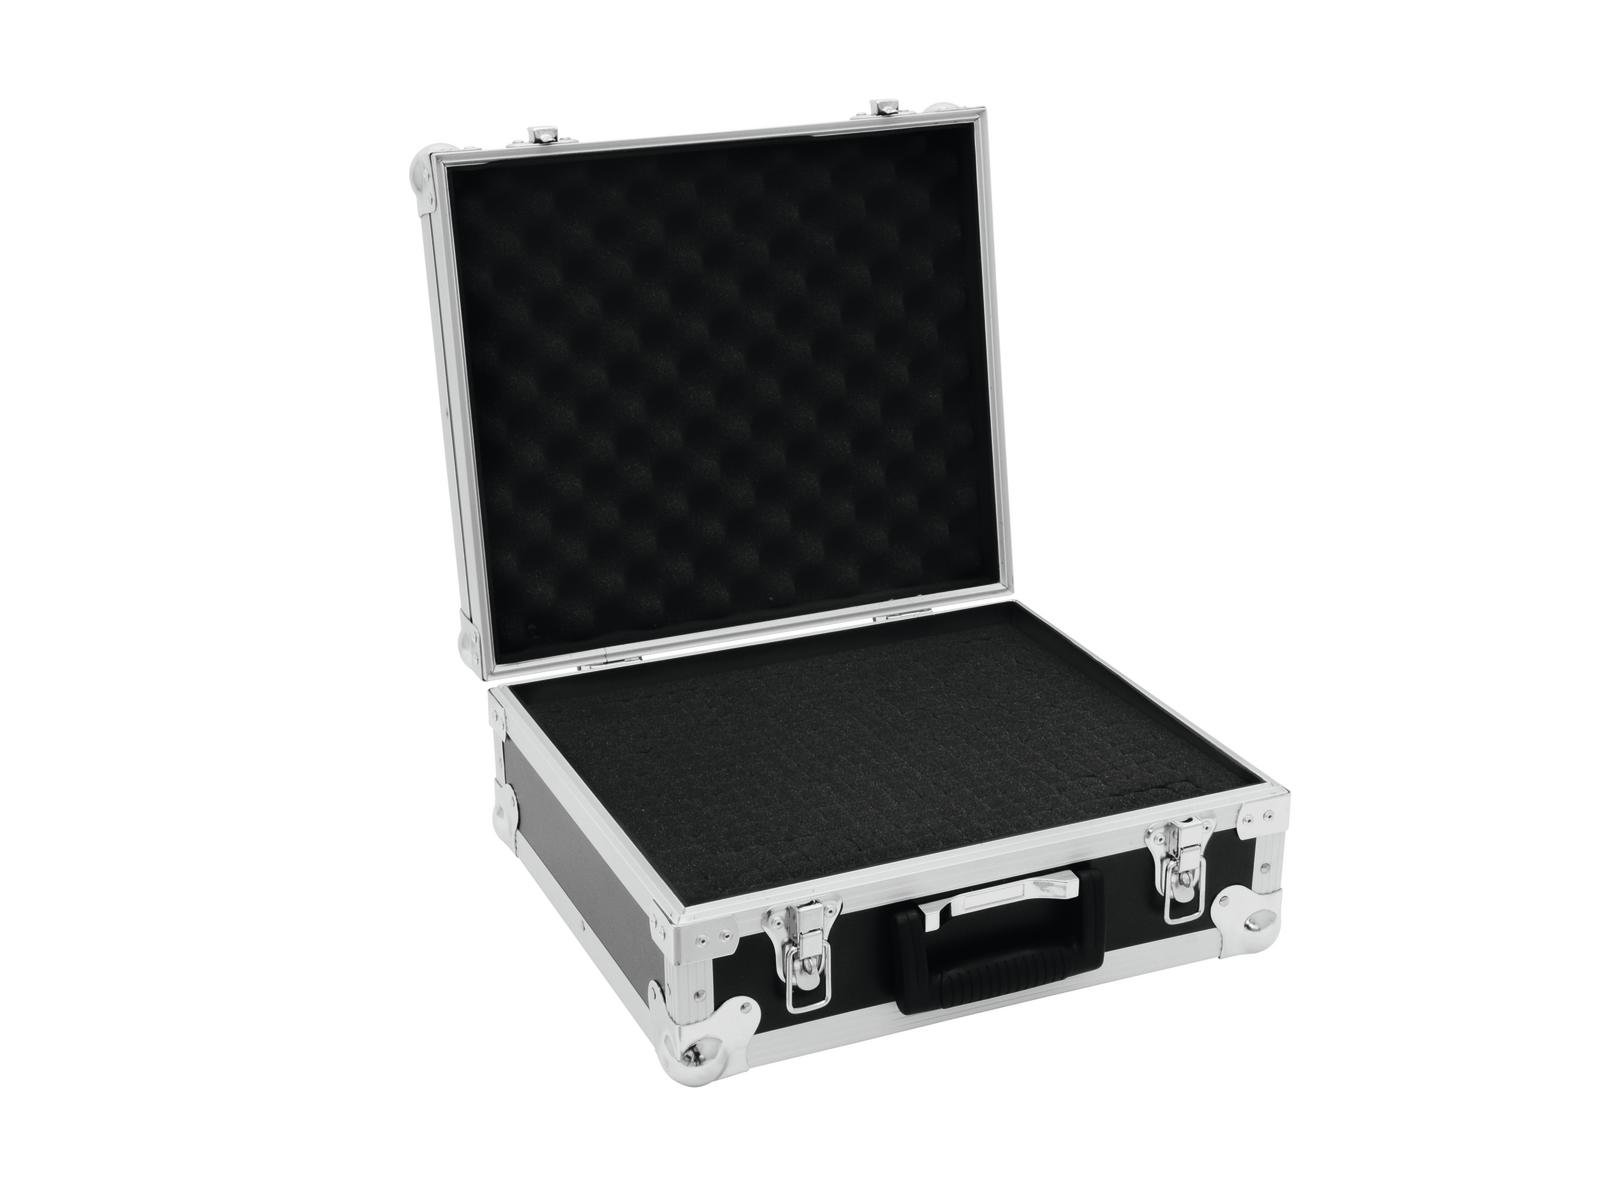 ROADINGER Universal-Koffer-Case FOAM GR-3 schwarz